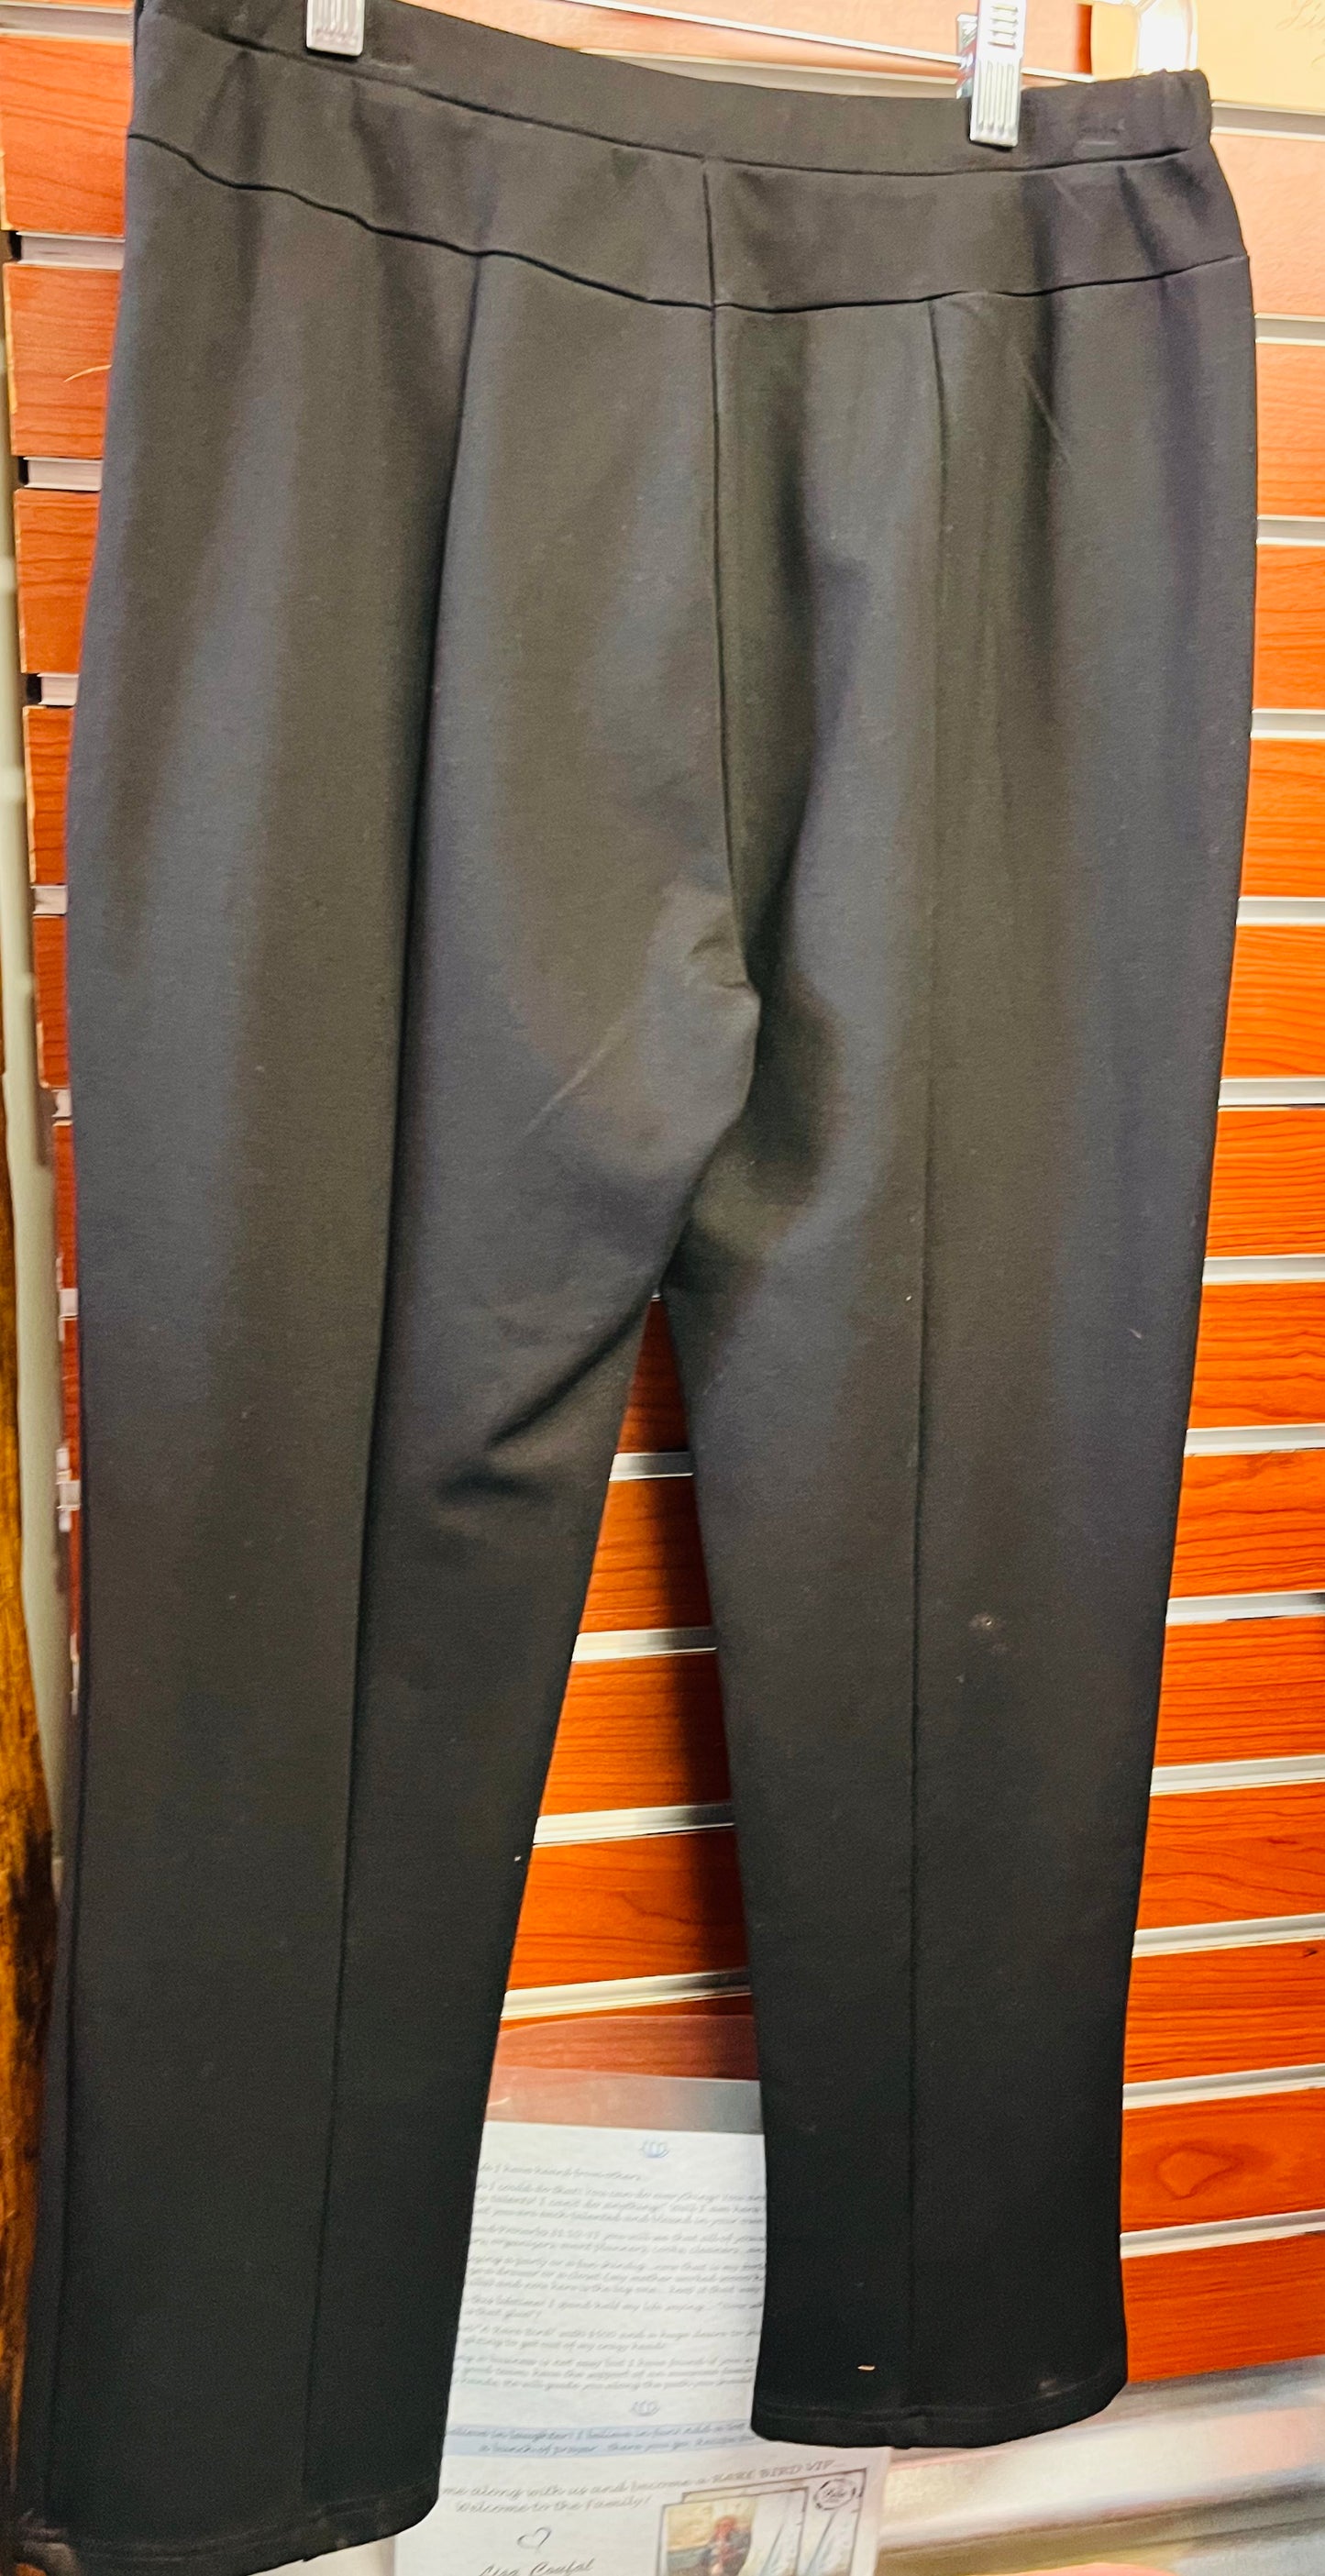 Black pants - Hem and Thread